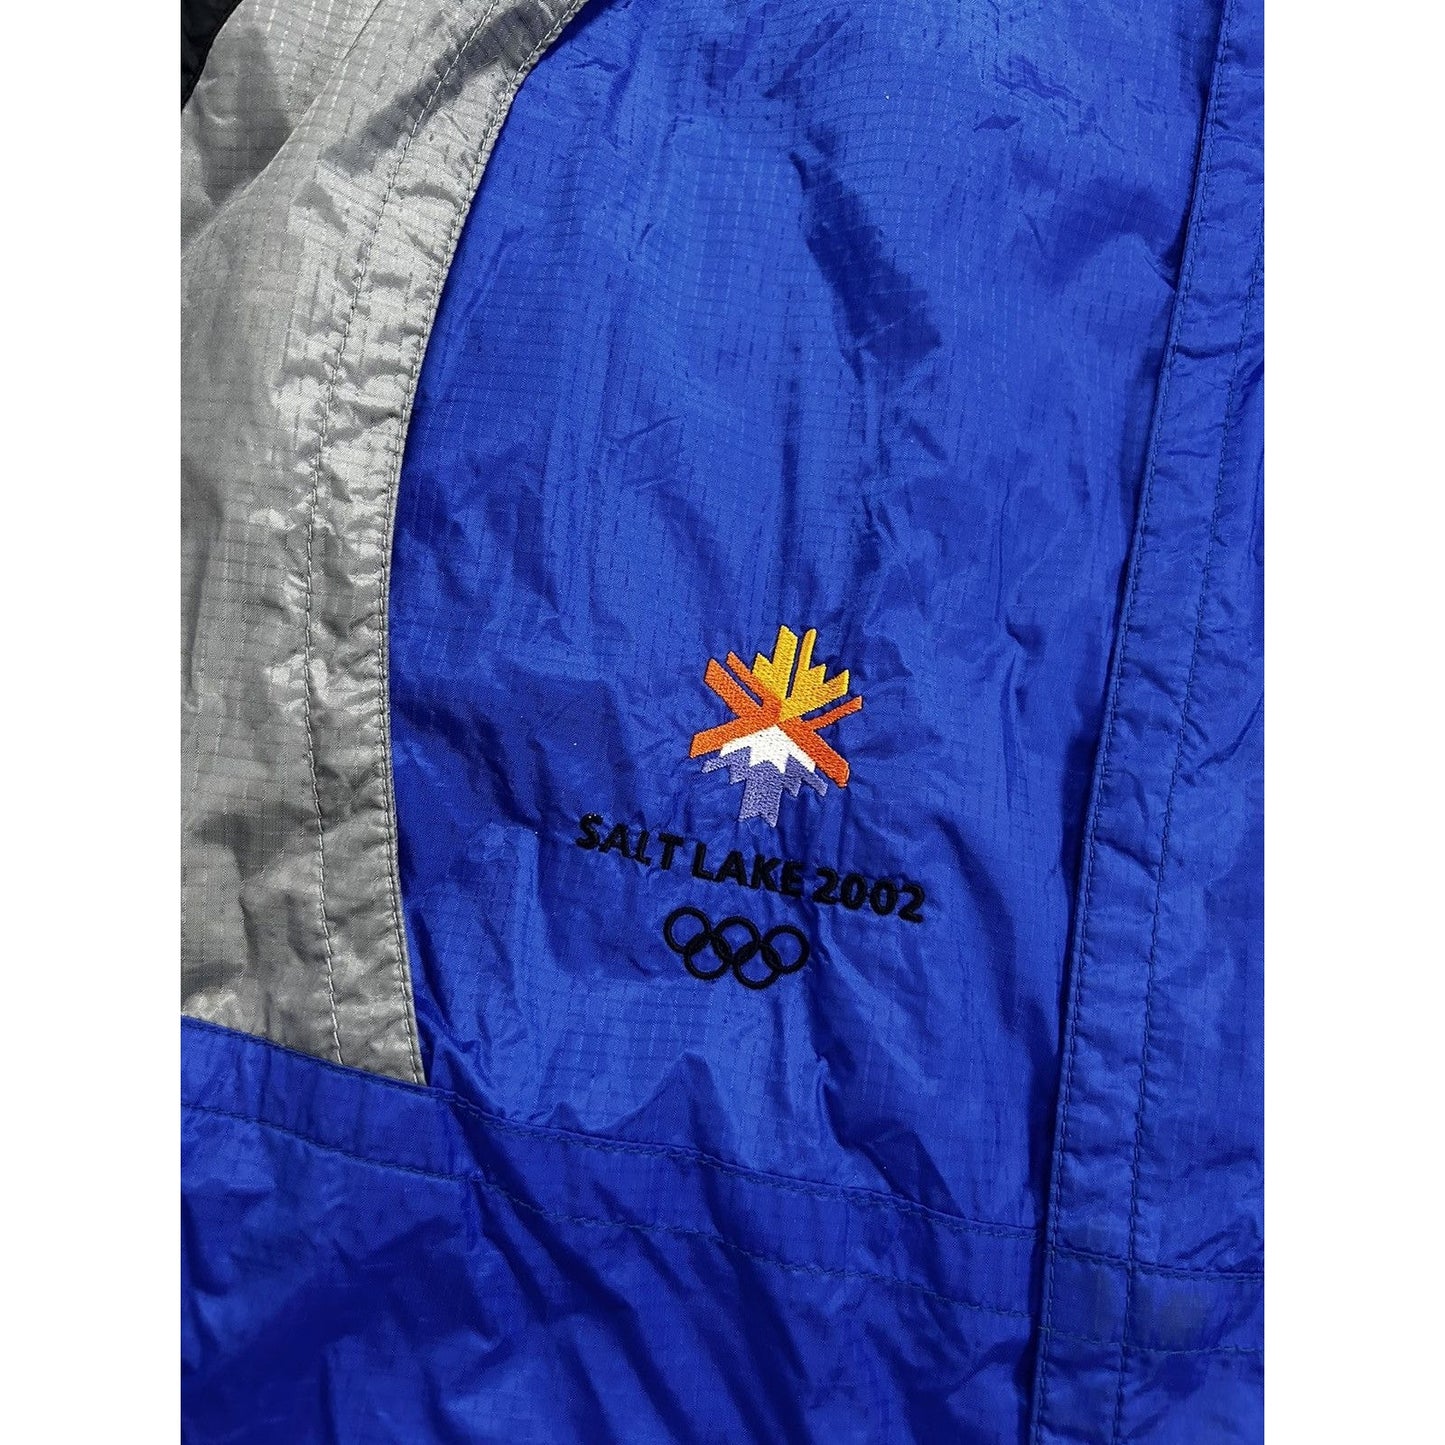 2002 Salt Lake City Winter Olympics Ski Jacket by Marker